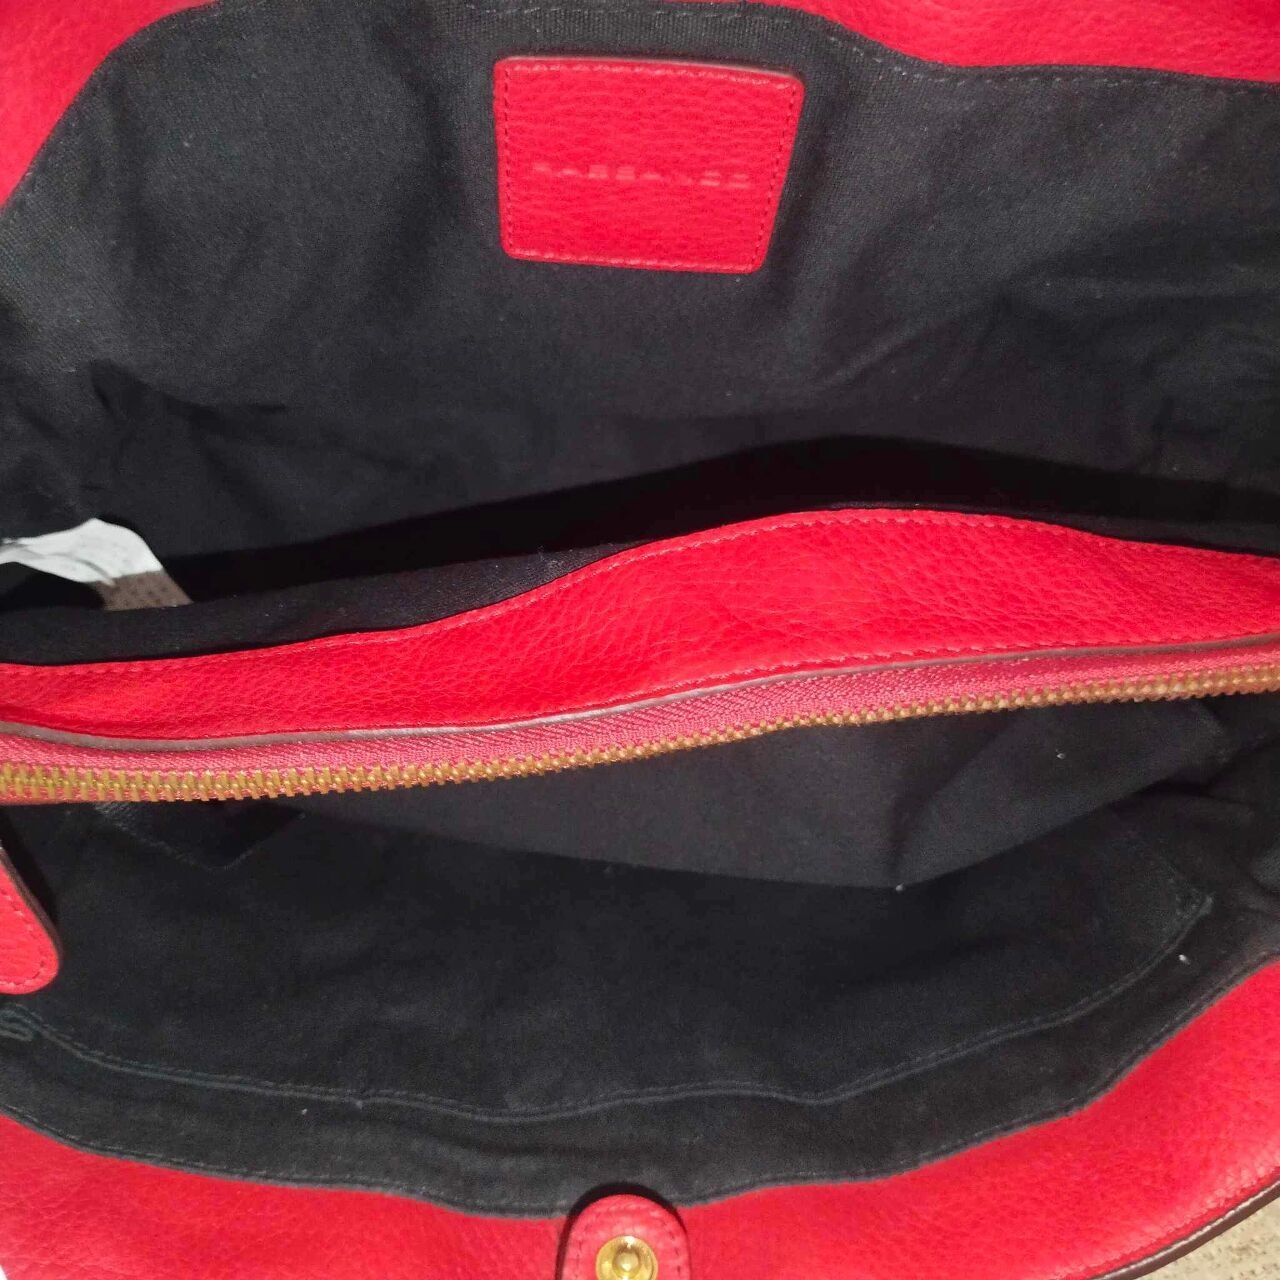 Rabeanco Red Handbag